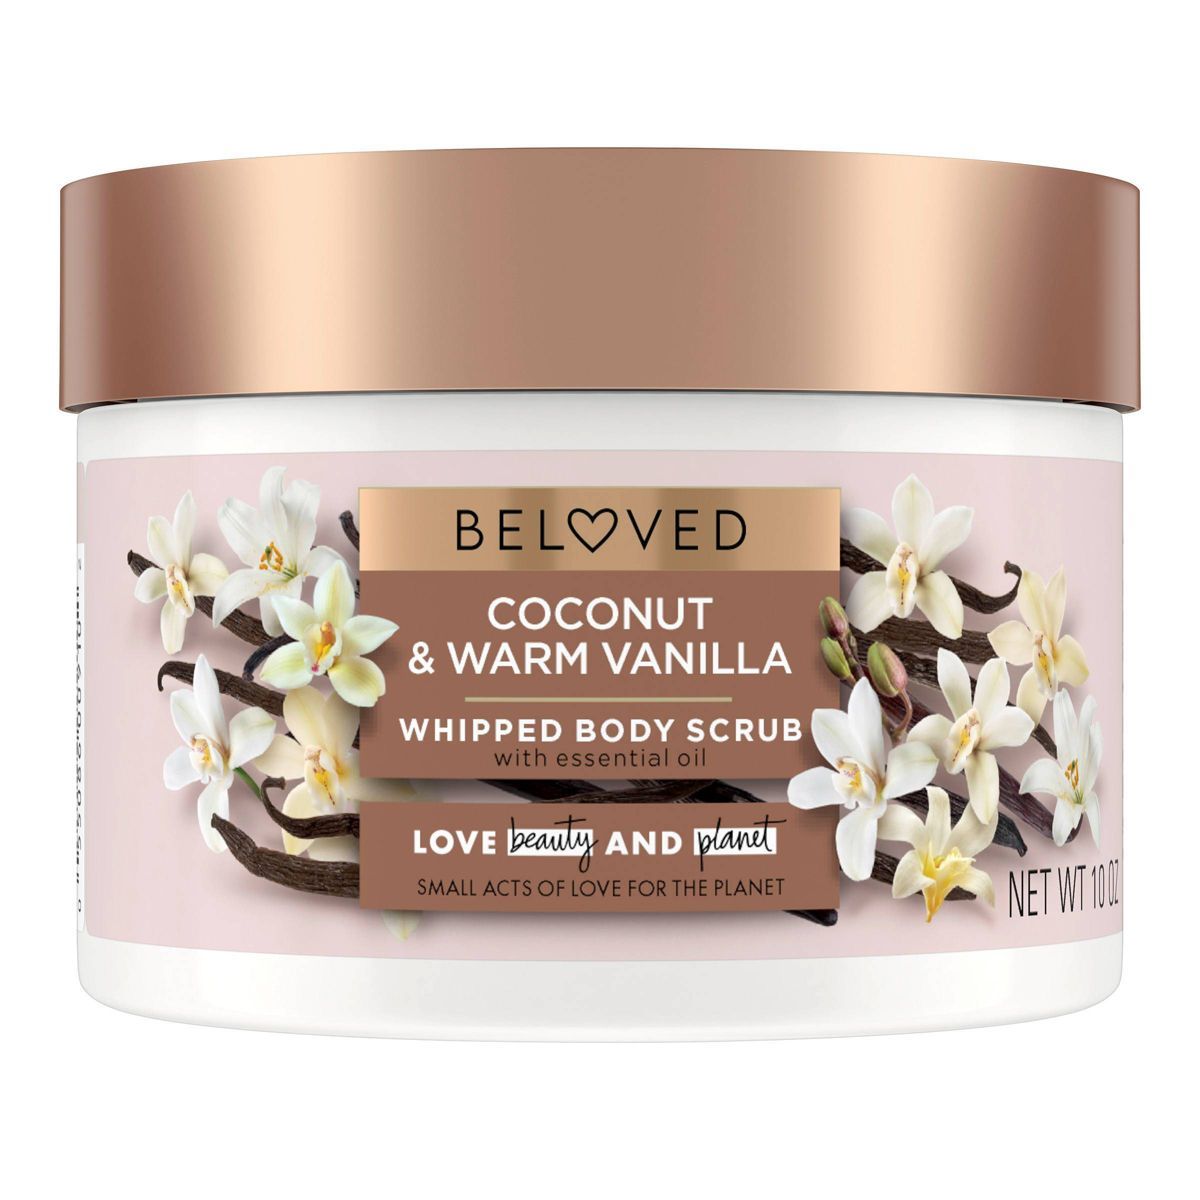 Beloved Coconut & Warm Vanilla Body Scrub - 10oz | Target